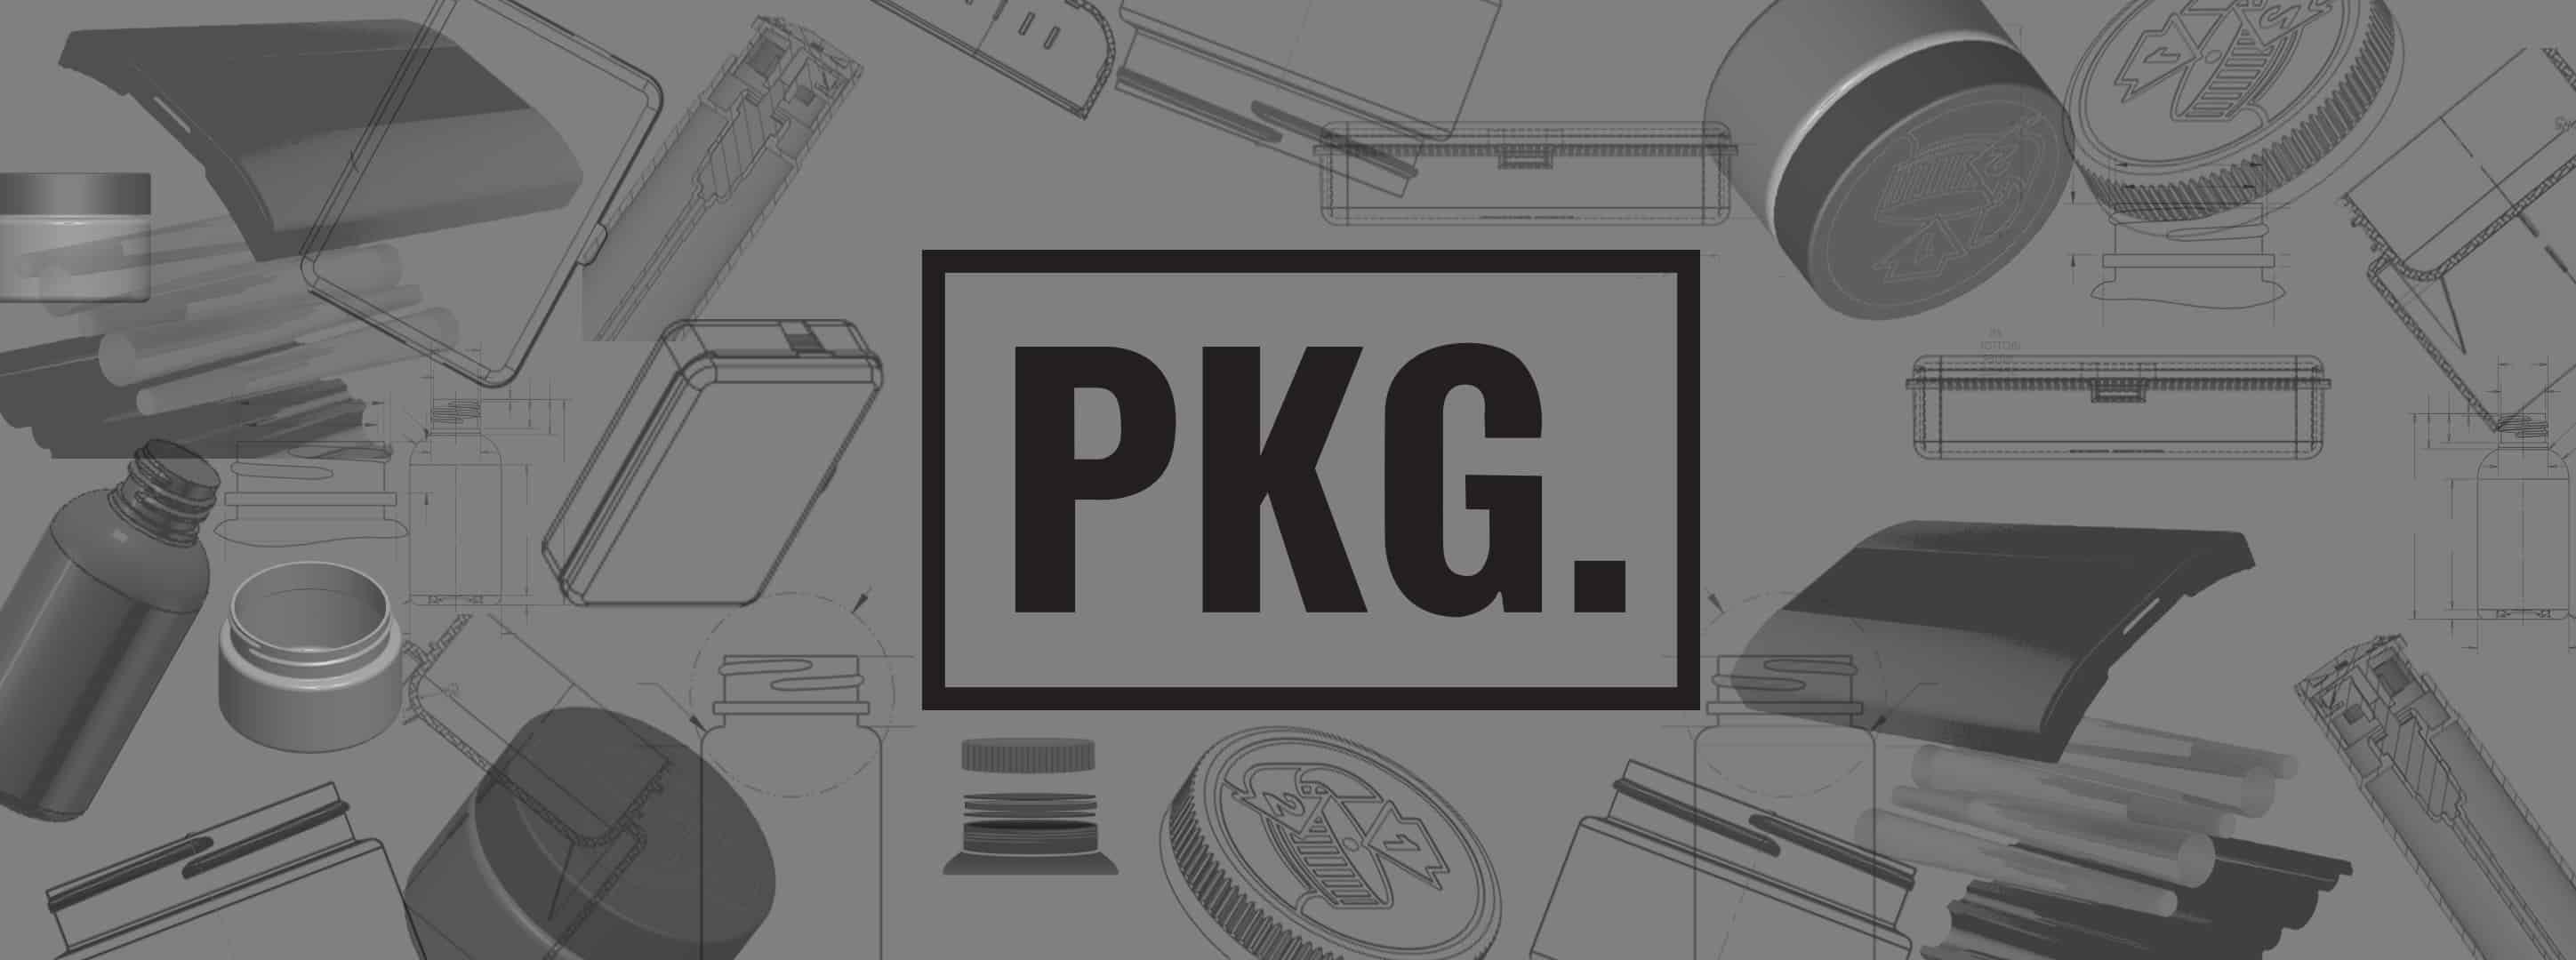 Introducing PKG. Custom Child-Resistant Packaging